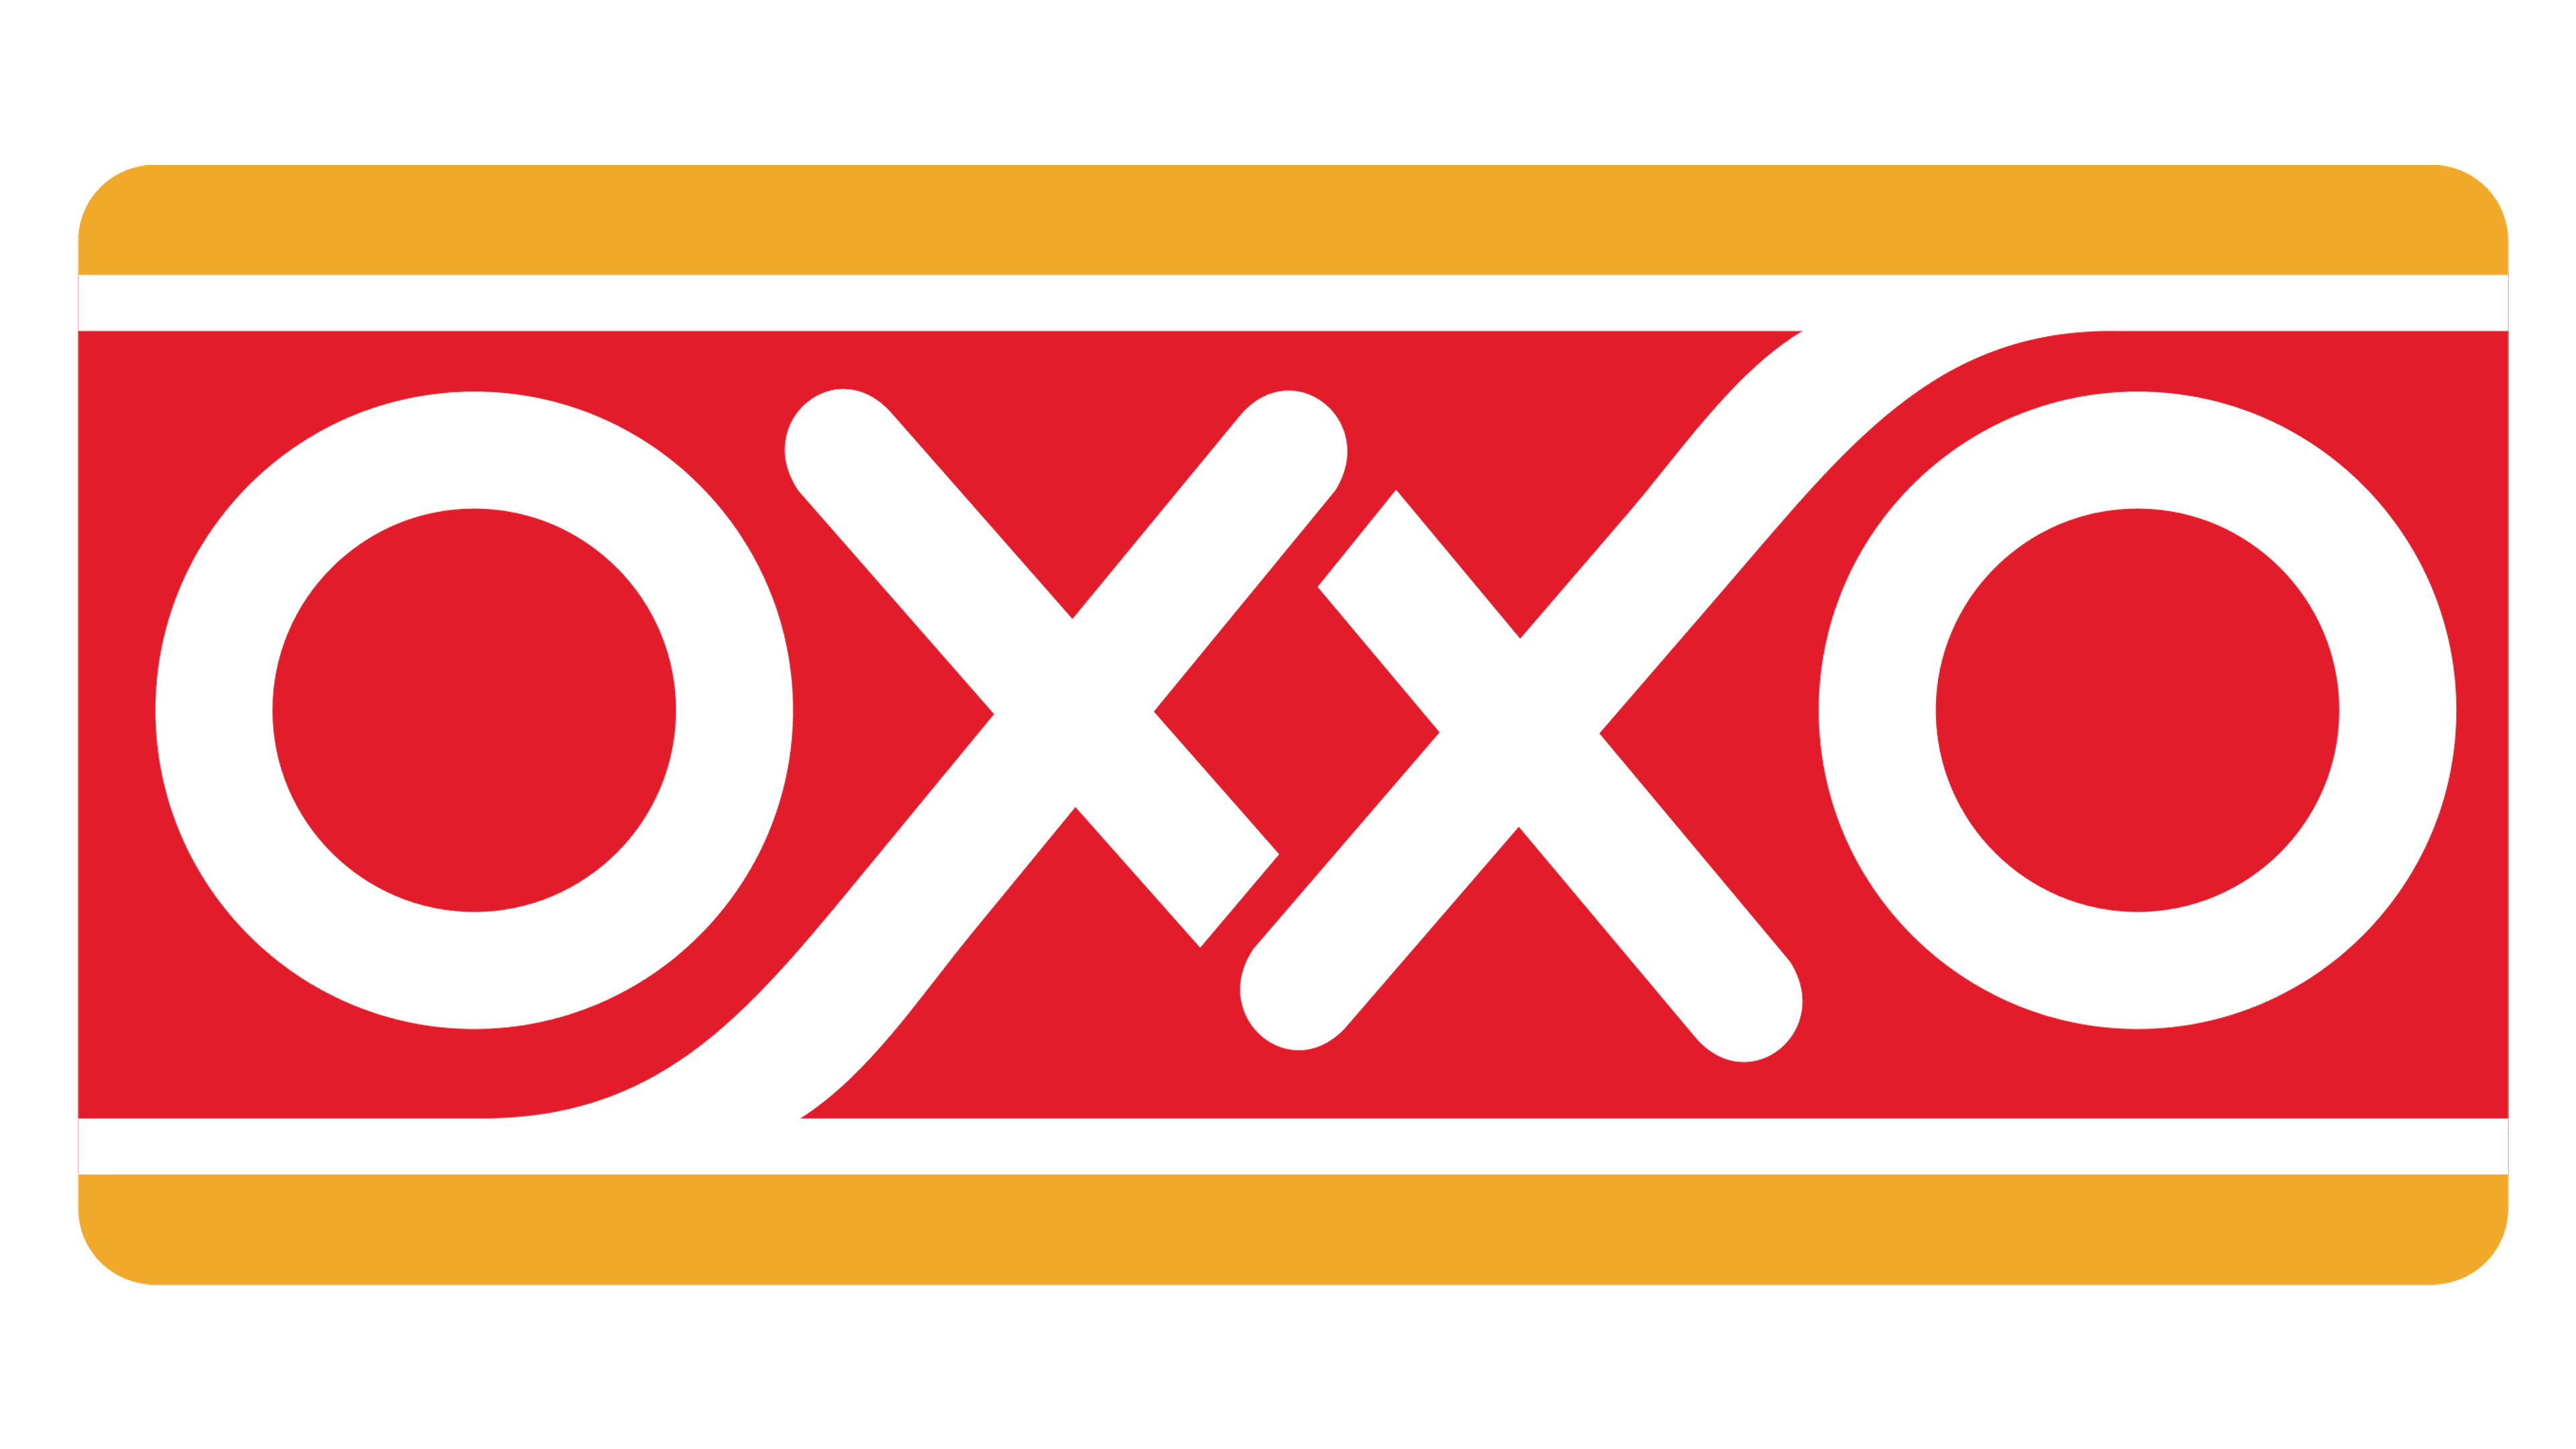 https://1000marcas.net/wp-content/uploads/2022/02/OXXO-Logo.png